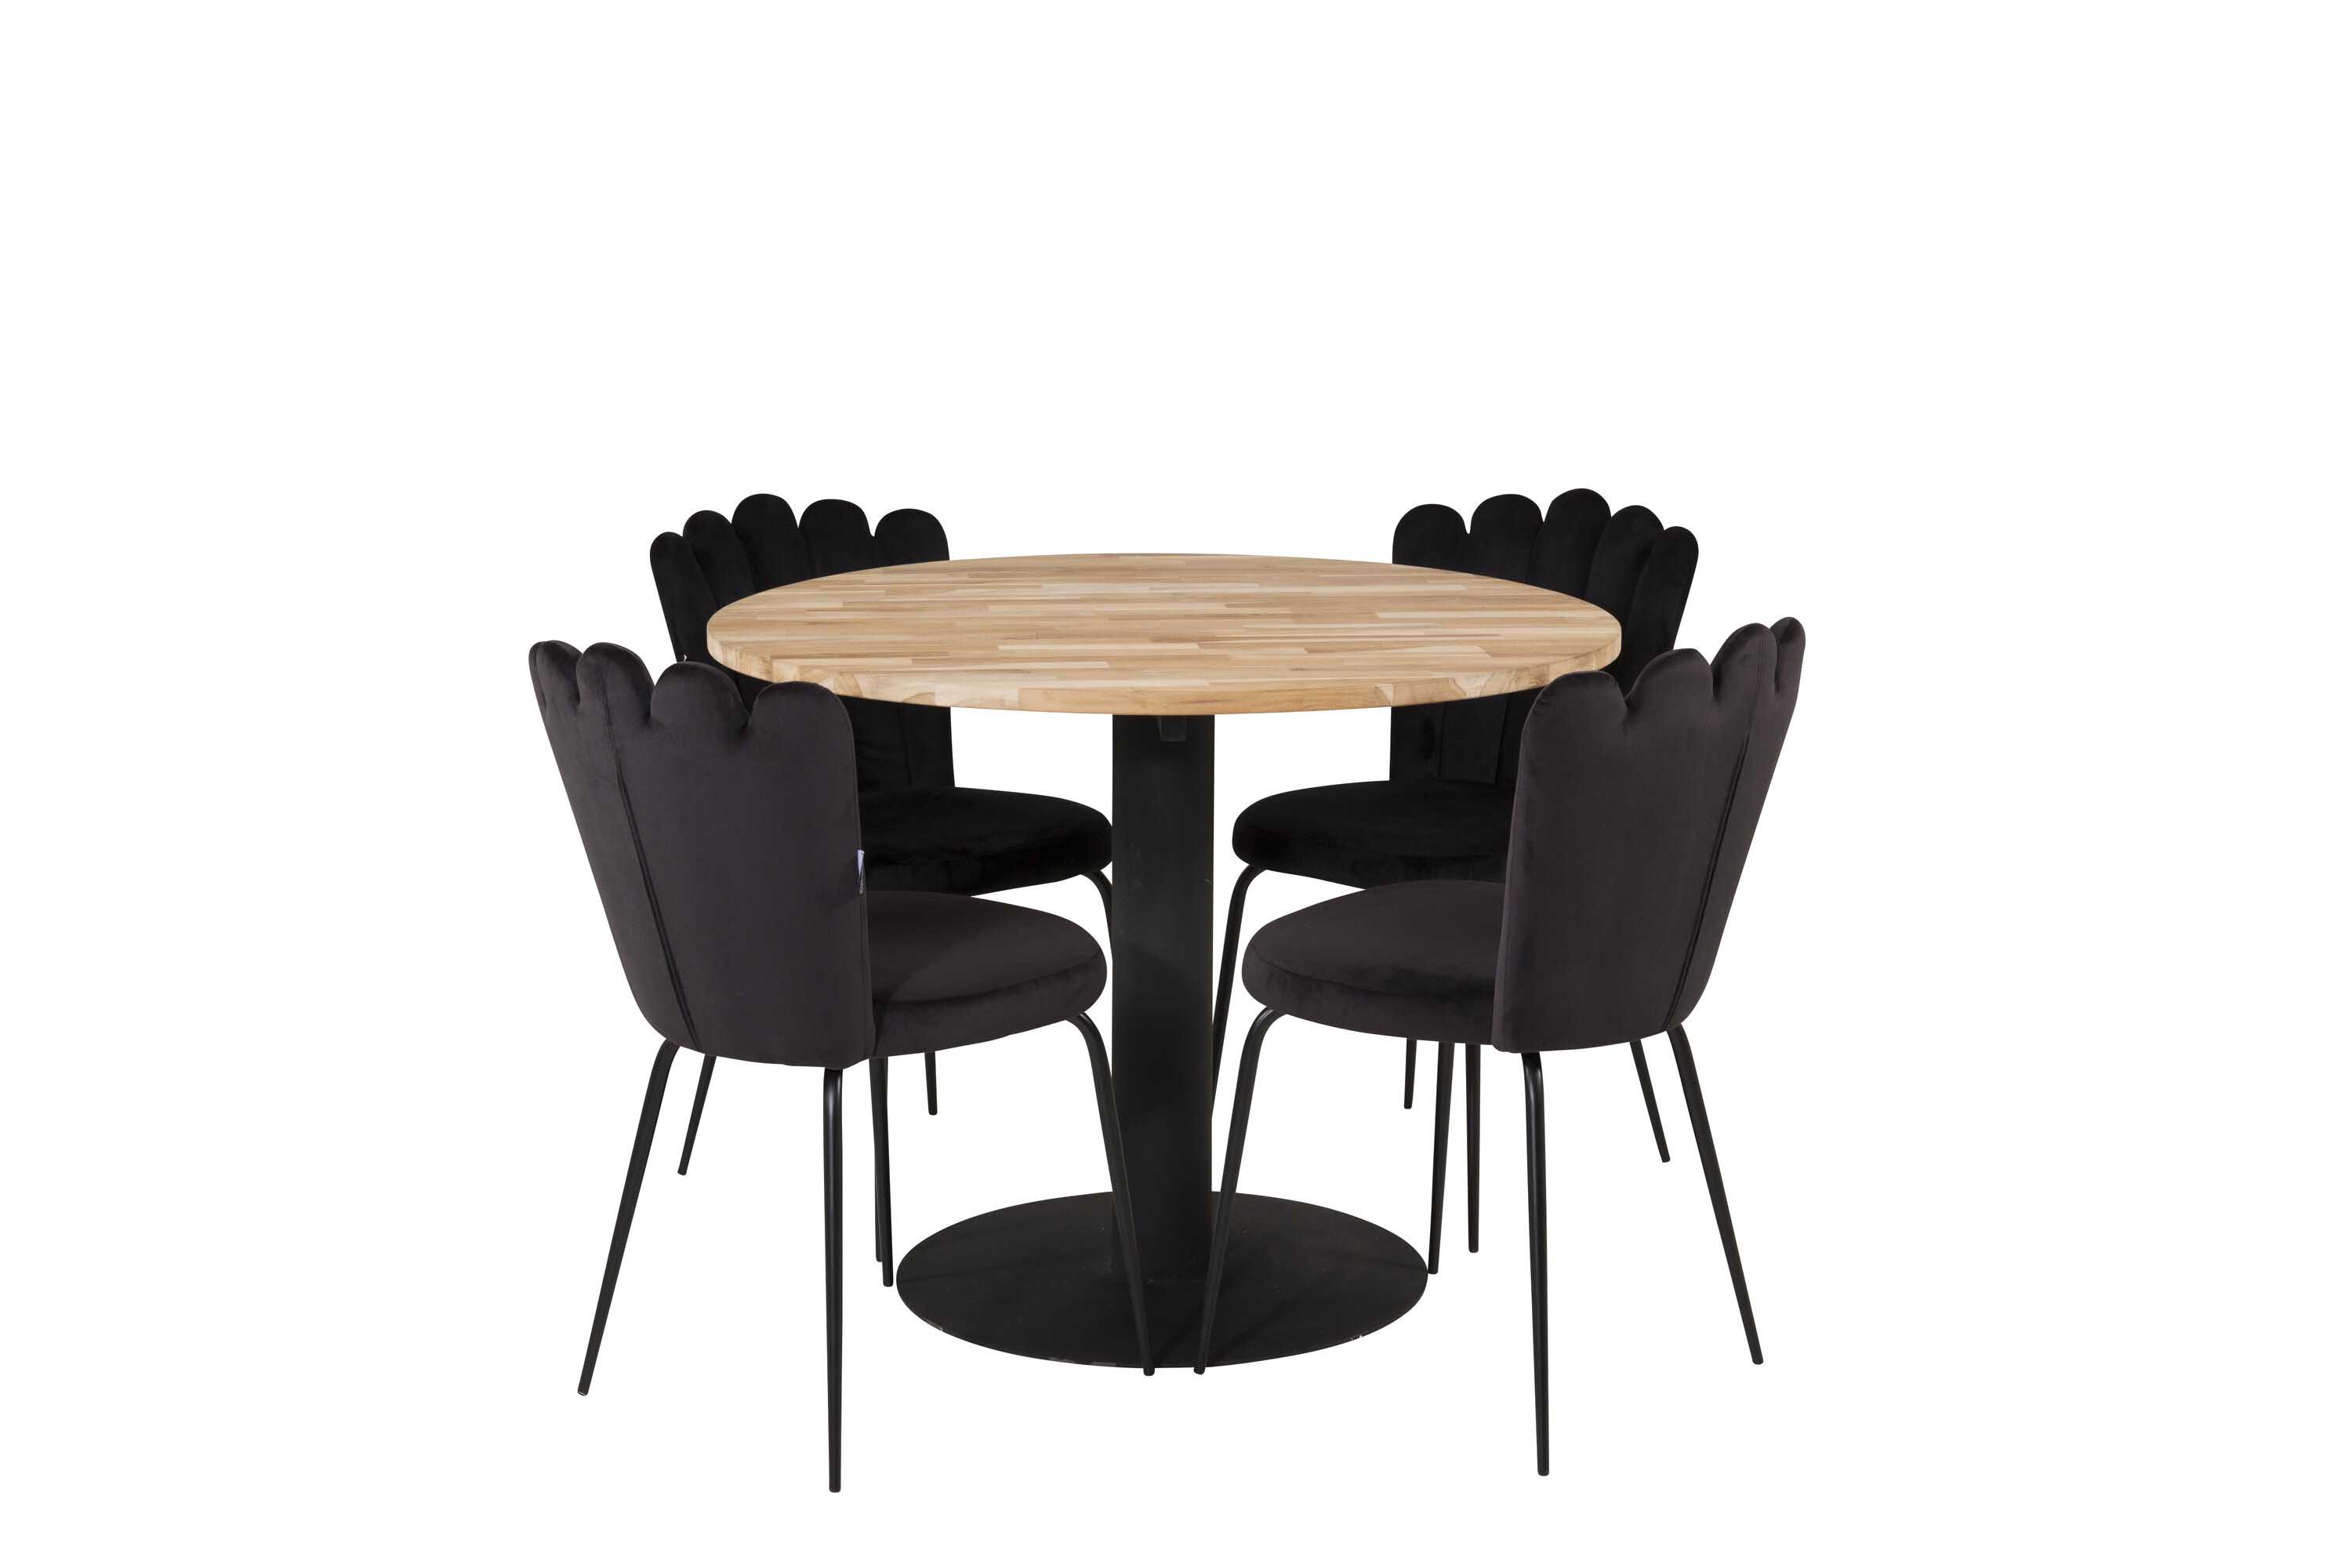 Venture Design Cirebon & Limhamn spisegruppe Natur/svart 4 st stoler & bord 100 cm